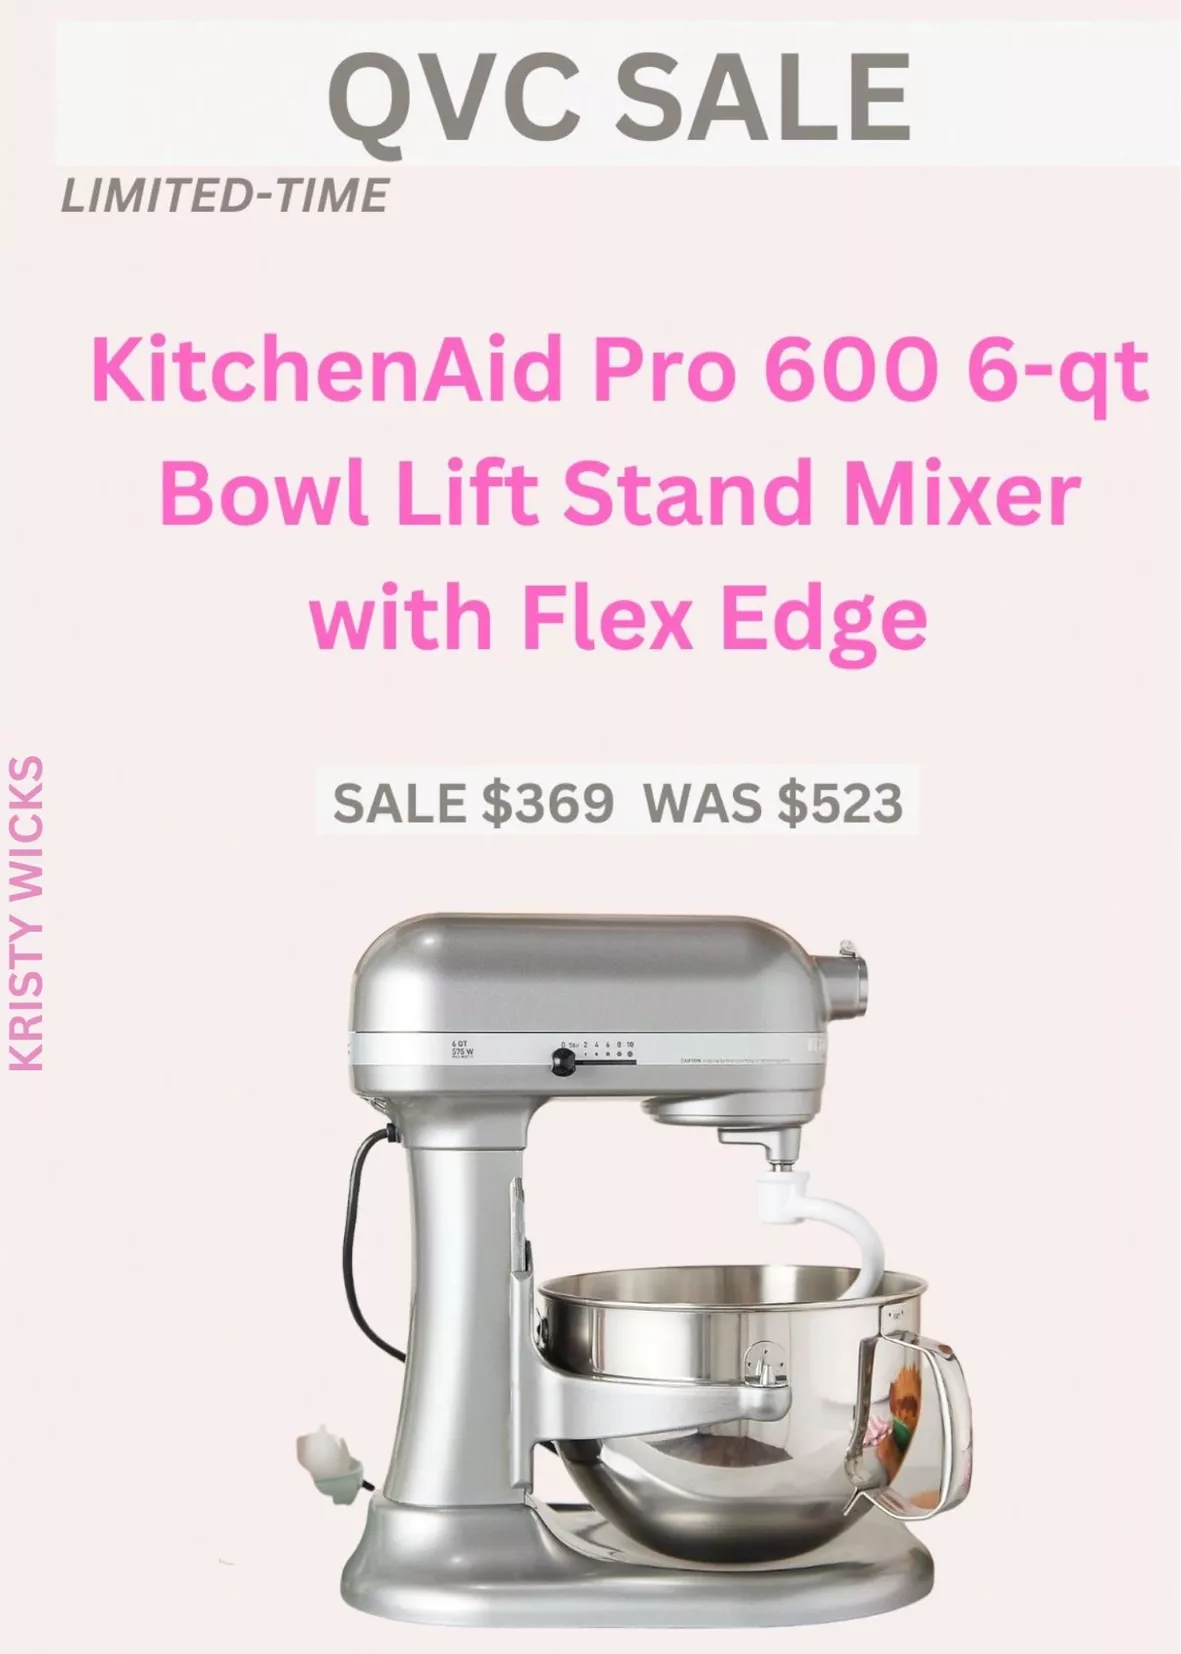 KitchenAid Professional Series 6 Quart Bowl Lift Stand Mixer with Flex Edge